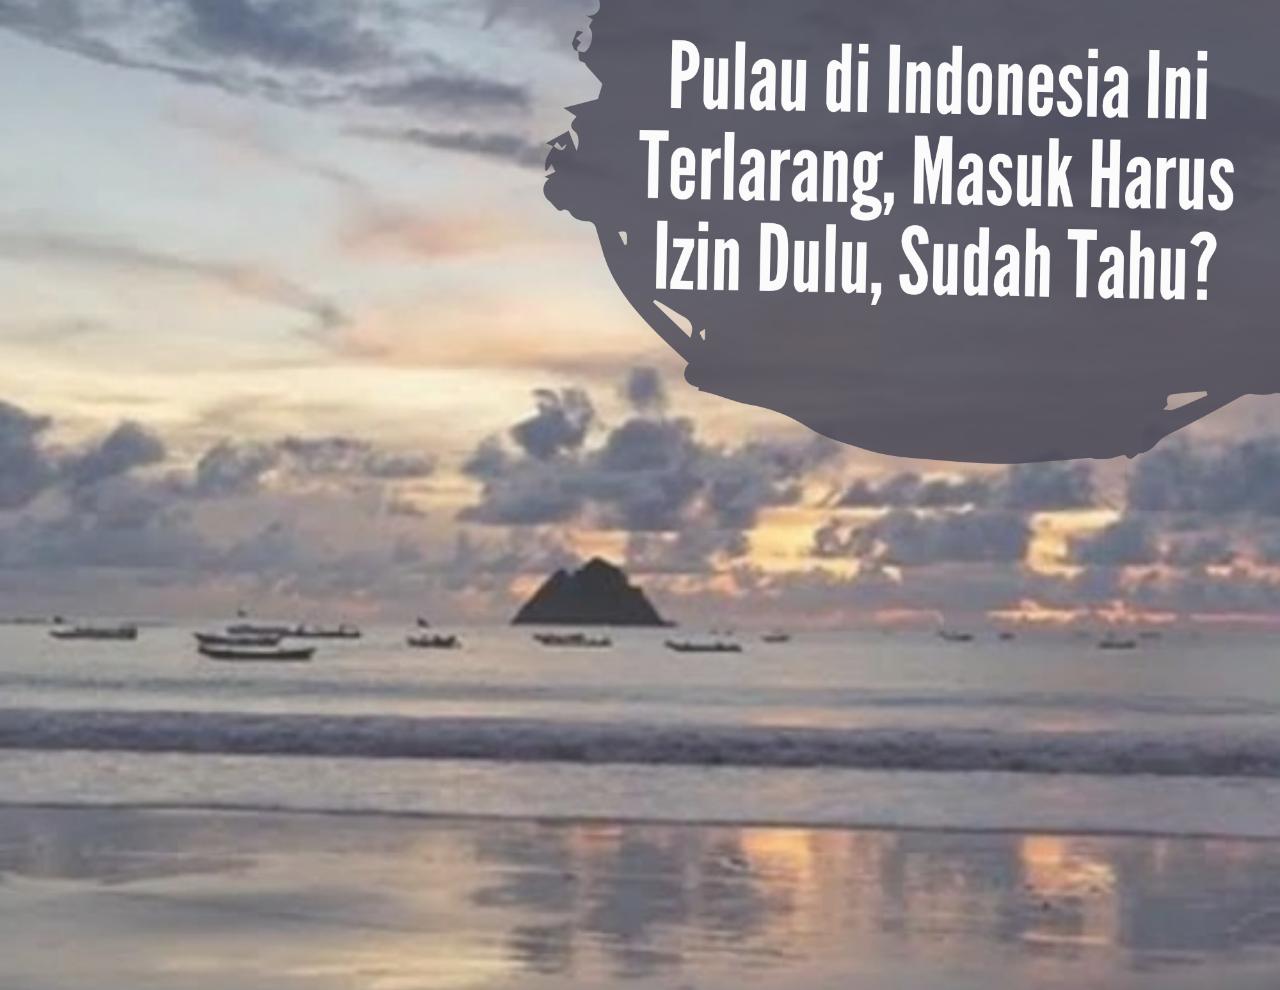 Serem! Pulau di Indonesia Ini Terlarang, Masuk Harus Izin Dulu, Sudah Tahu?